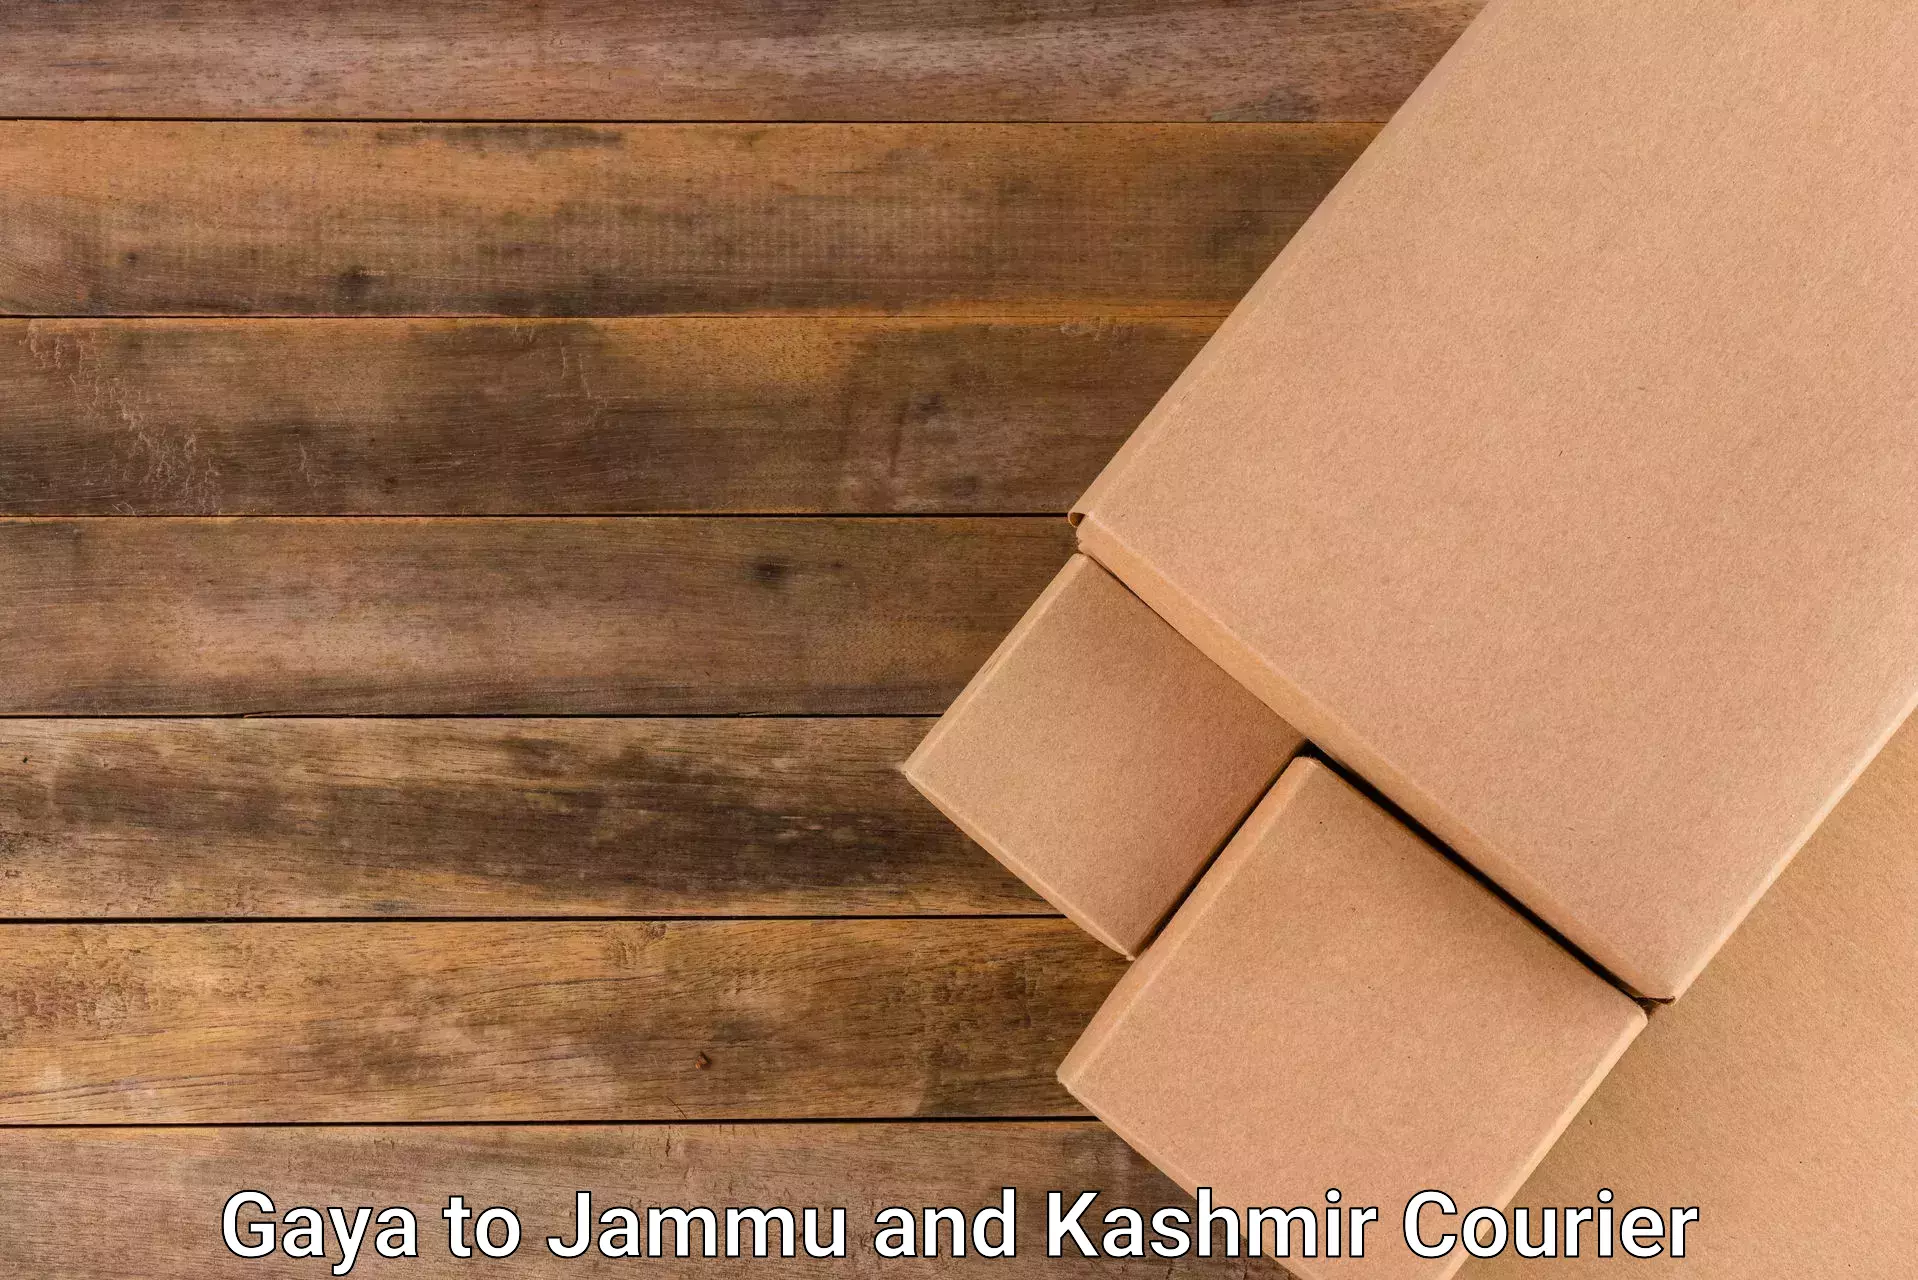 Delivery service partnership Gaya to Jammu